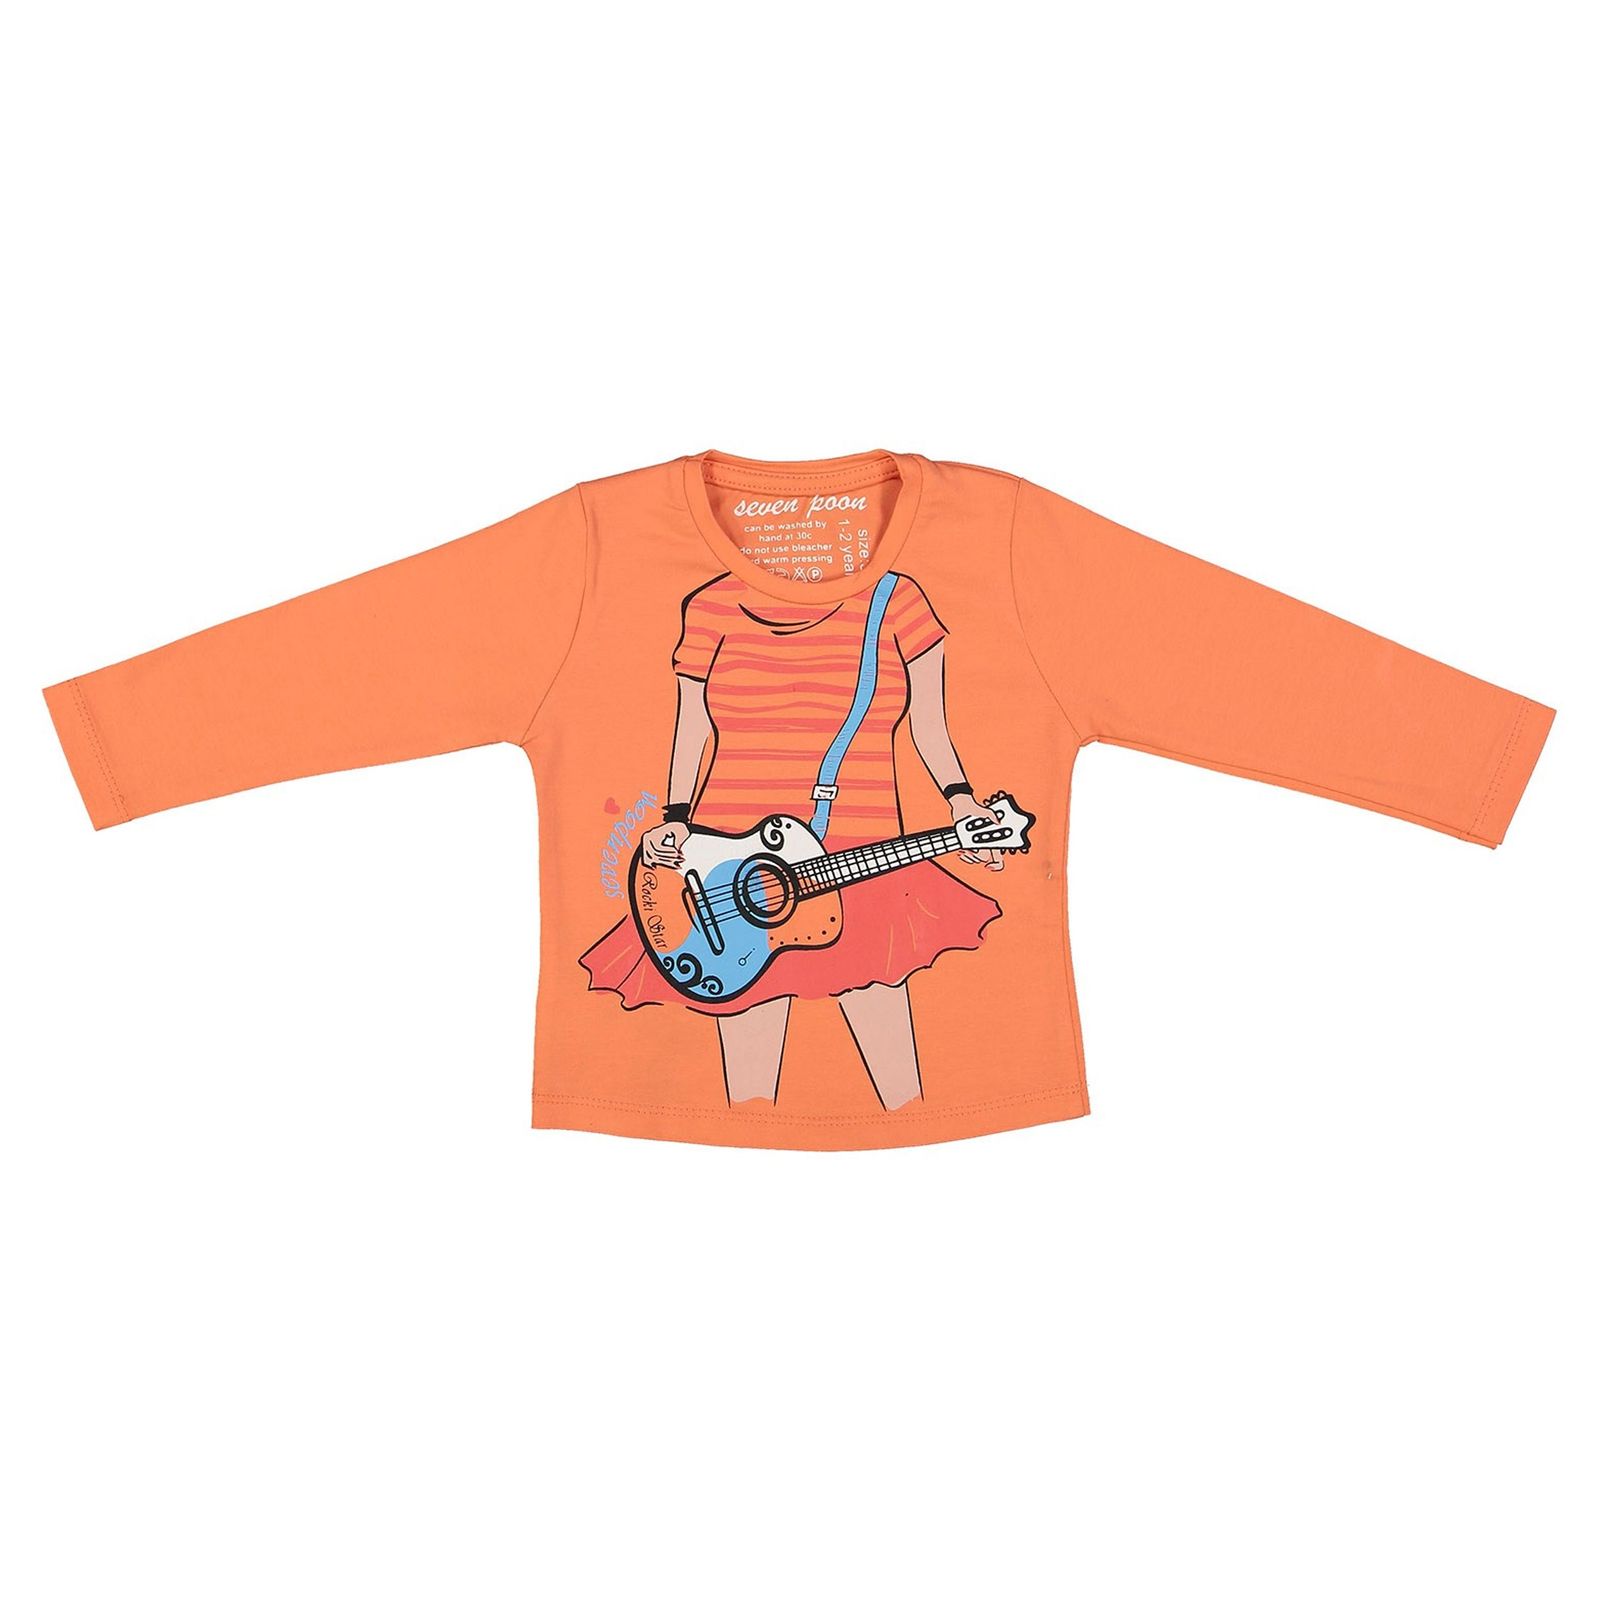 تی شرت نخی یقه گرد دخترانه - سون پون - نارنجی - 1